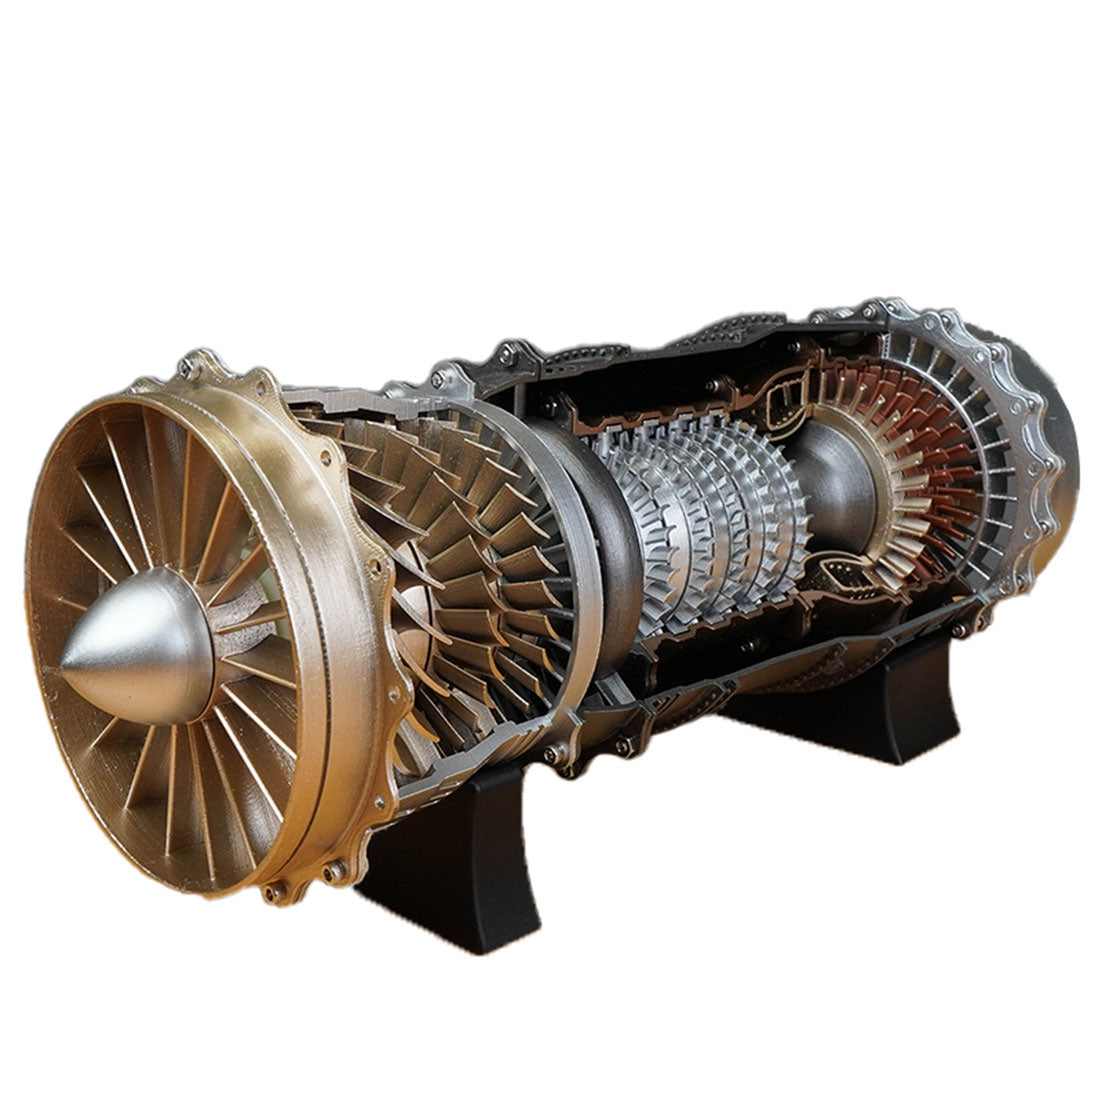 WS-15 Turbofan Engine Model Kit that Works - EngineDIY